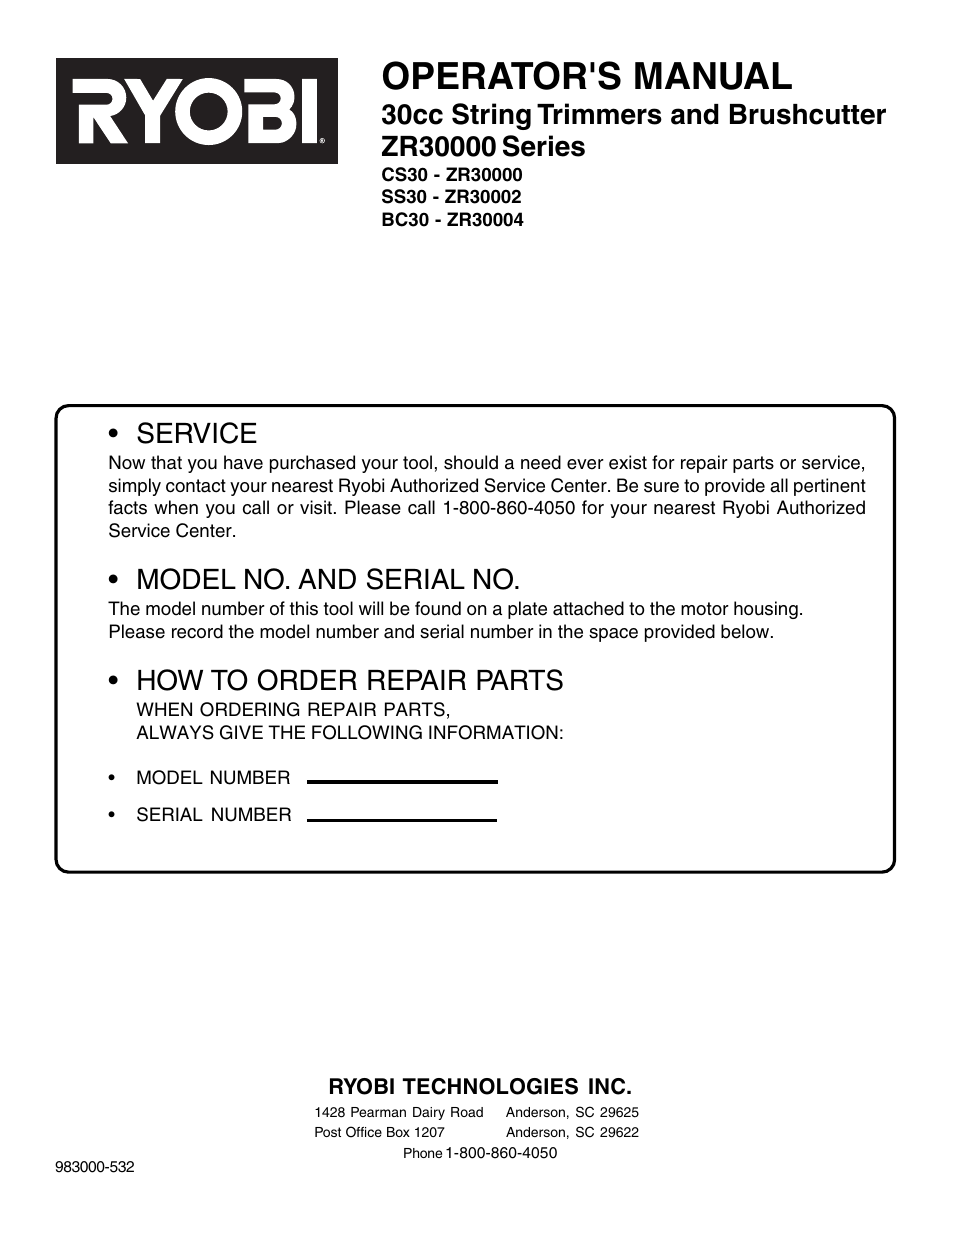 Operator's manual, Service, Model no. and serial no | Ryobi CS30